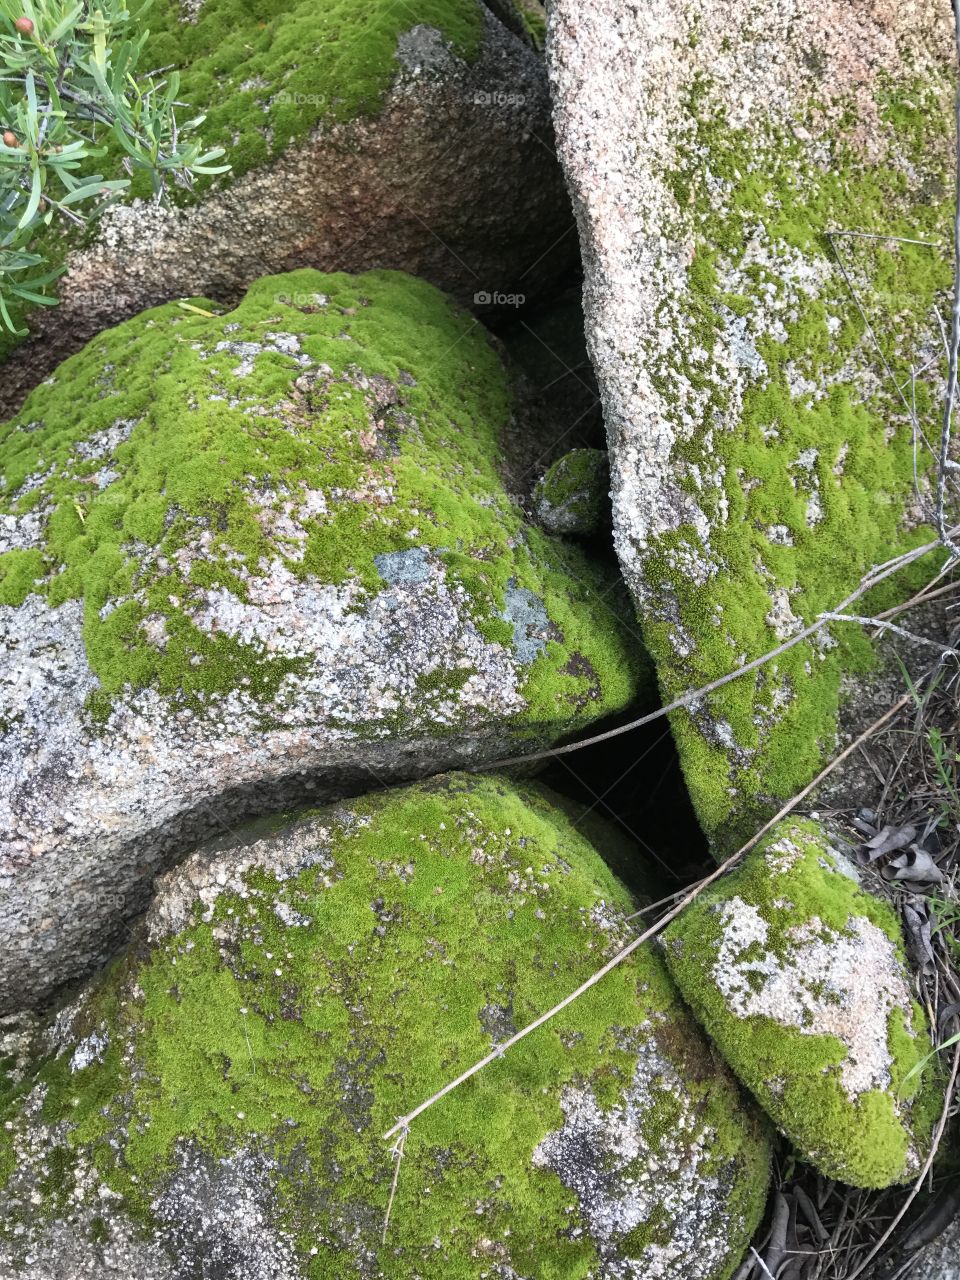 Mossy rocks